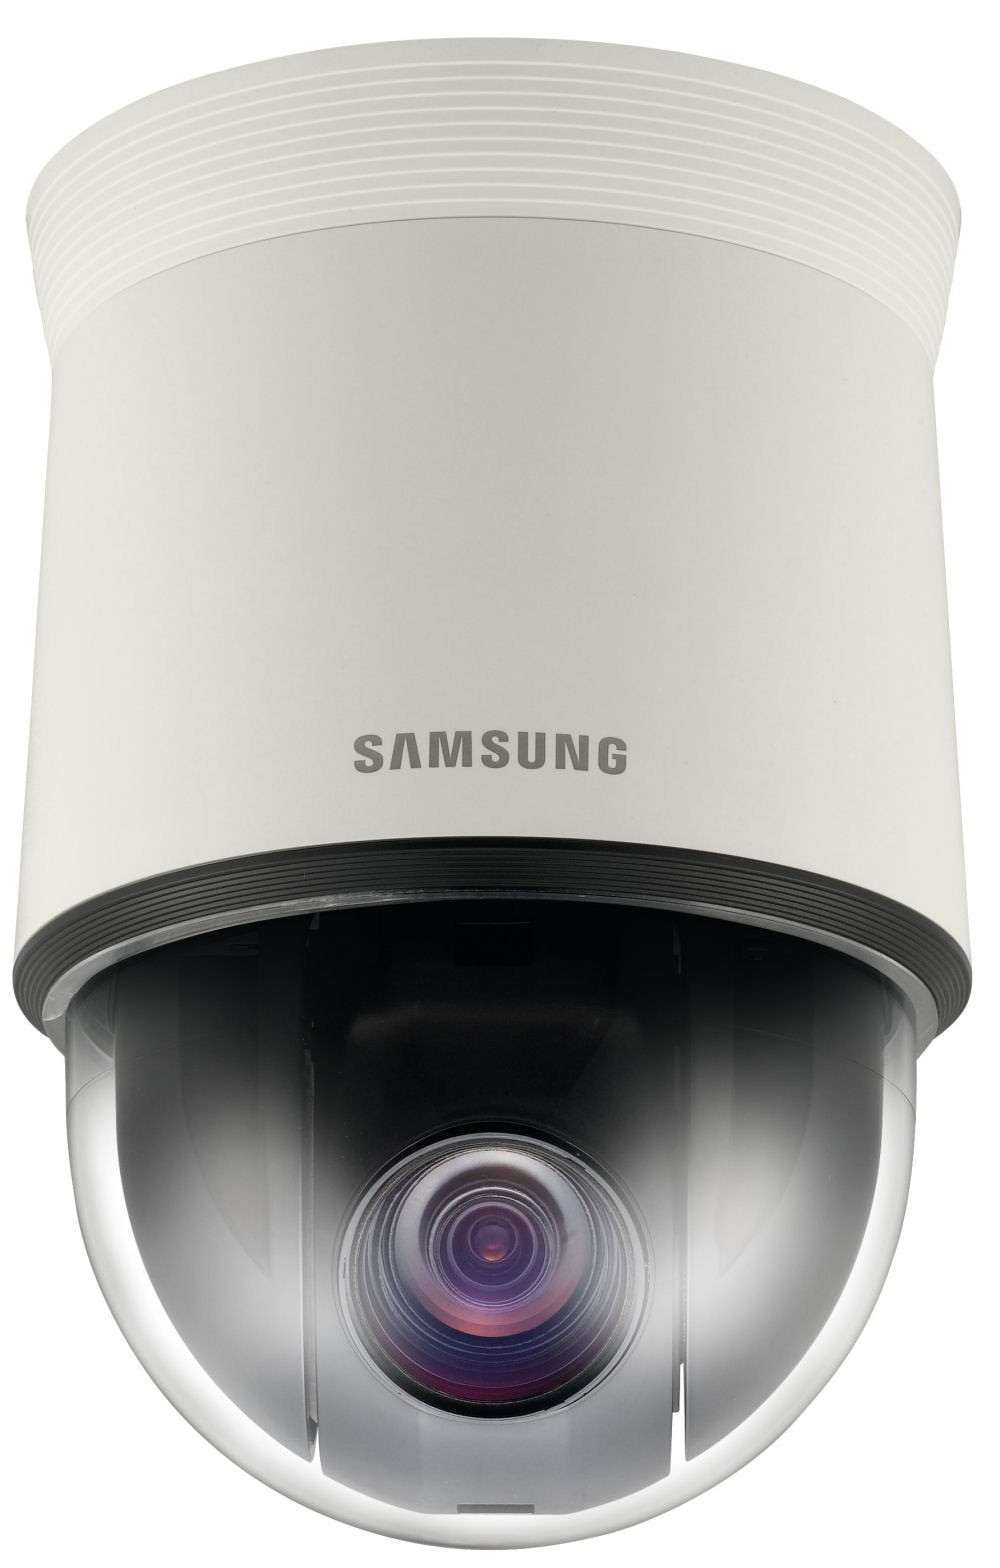 Samsung SCP2273P High Resolution 27x PTZ Dome Camera